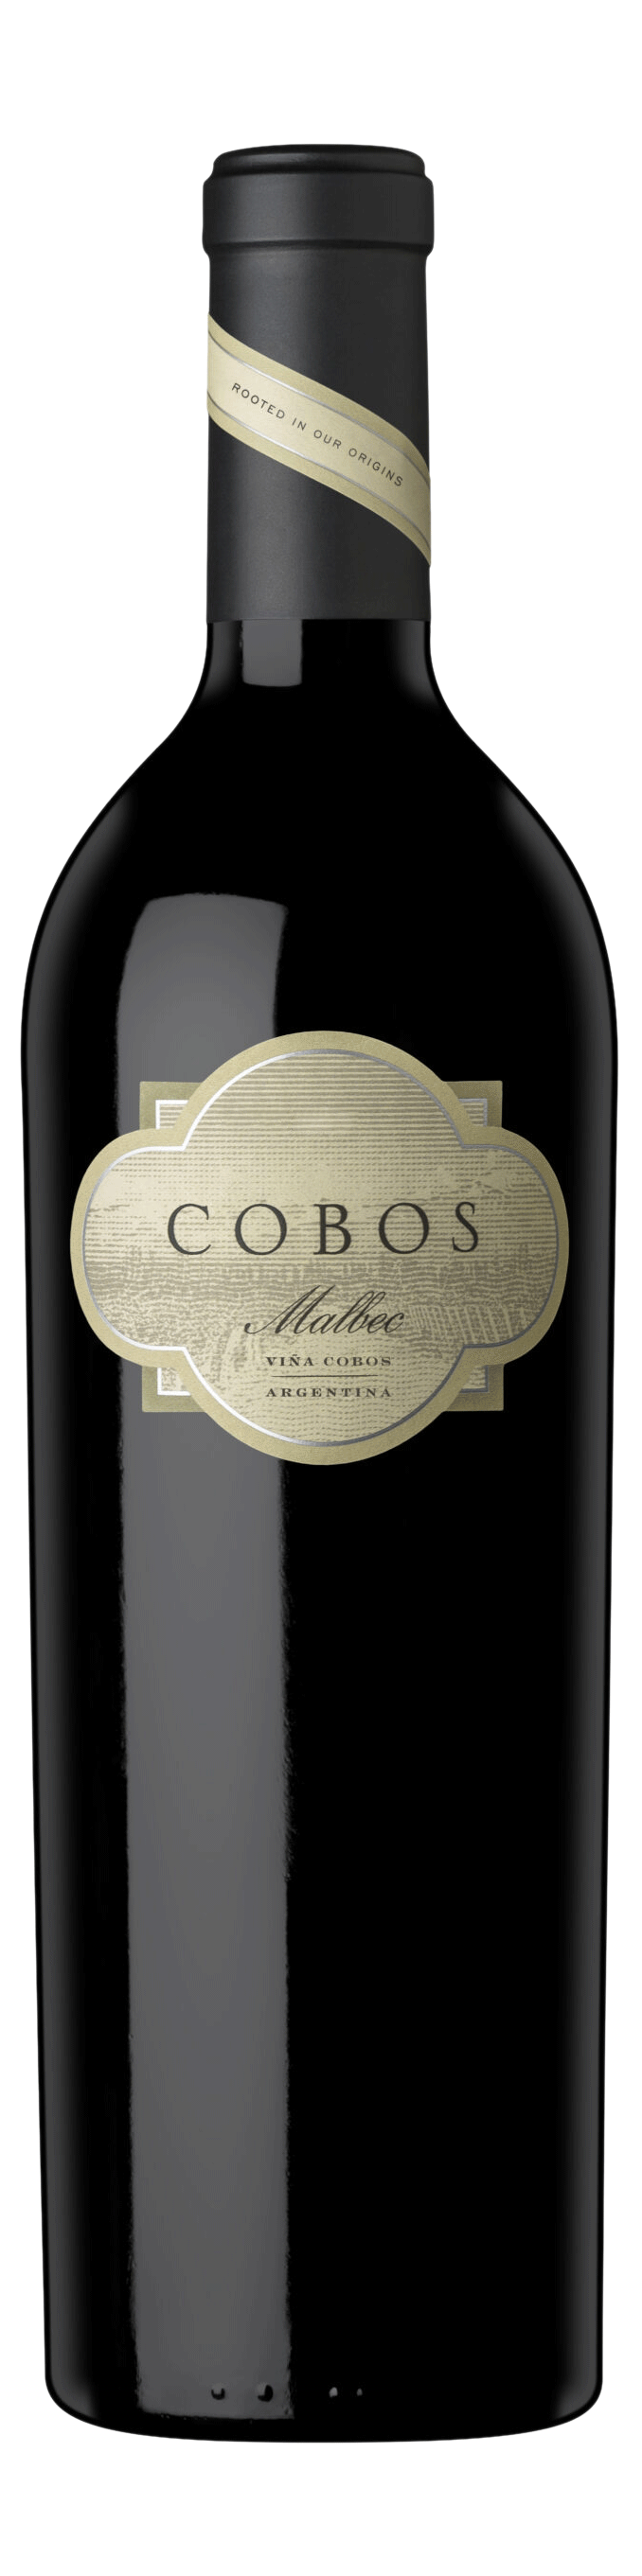 Bottle shot - Vina Cobos, Cobos Malbec, Mendoza, Argentina